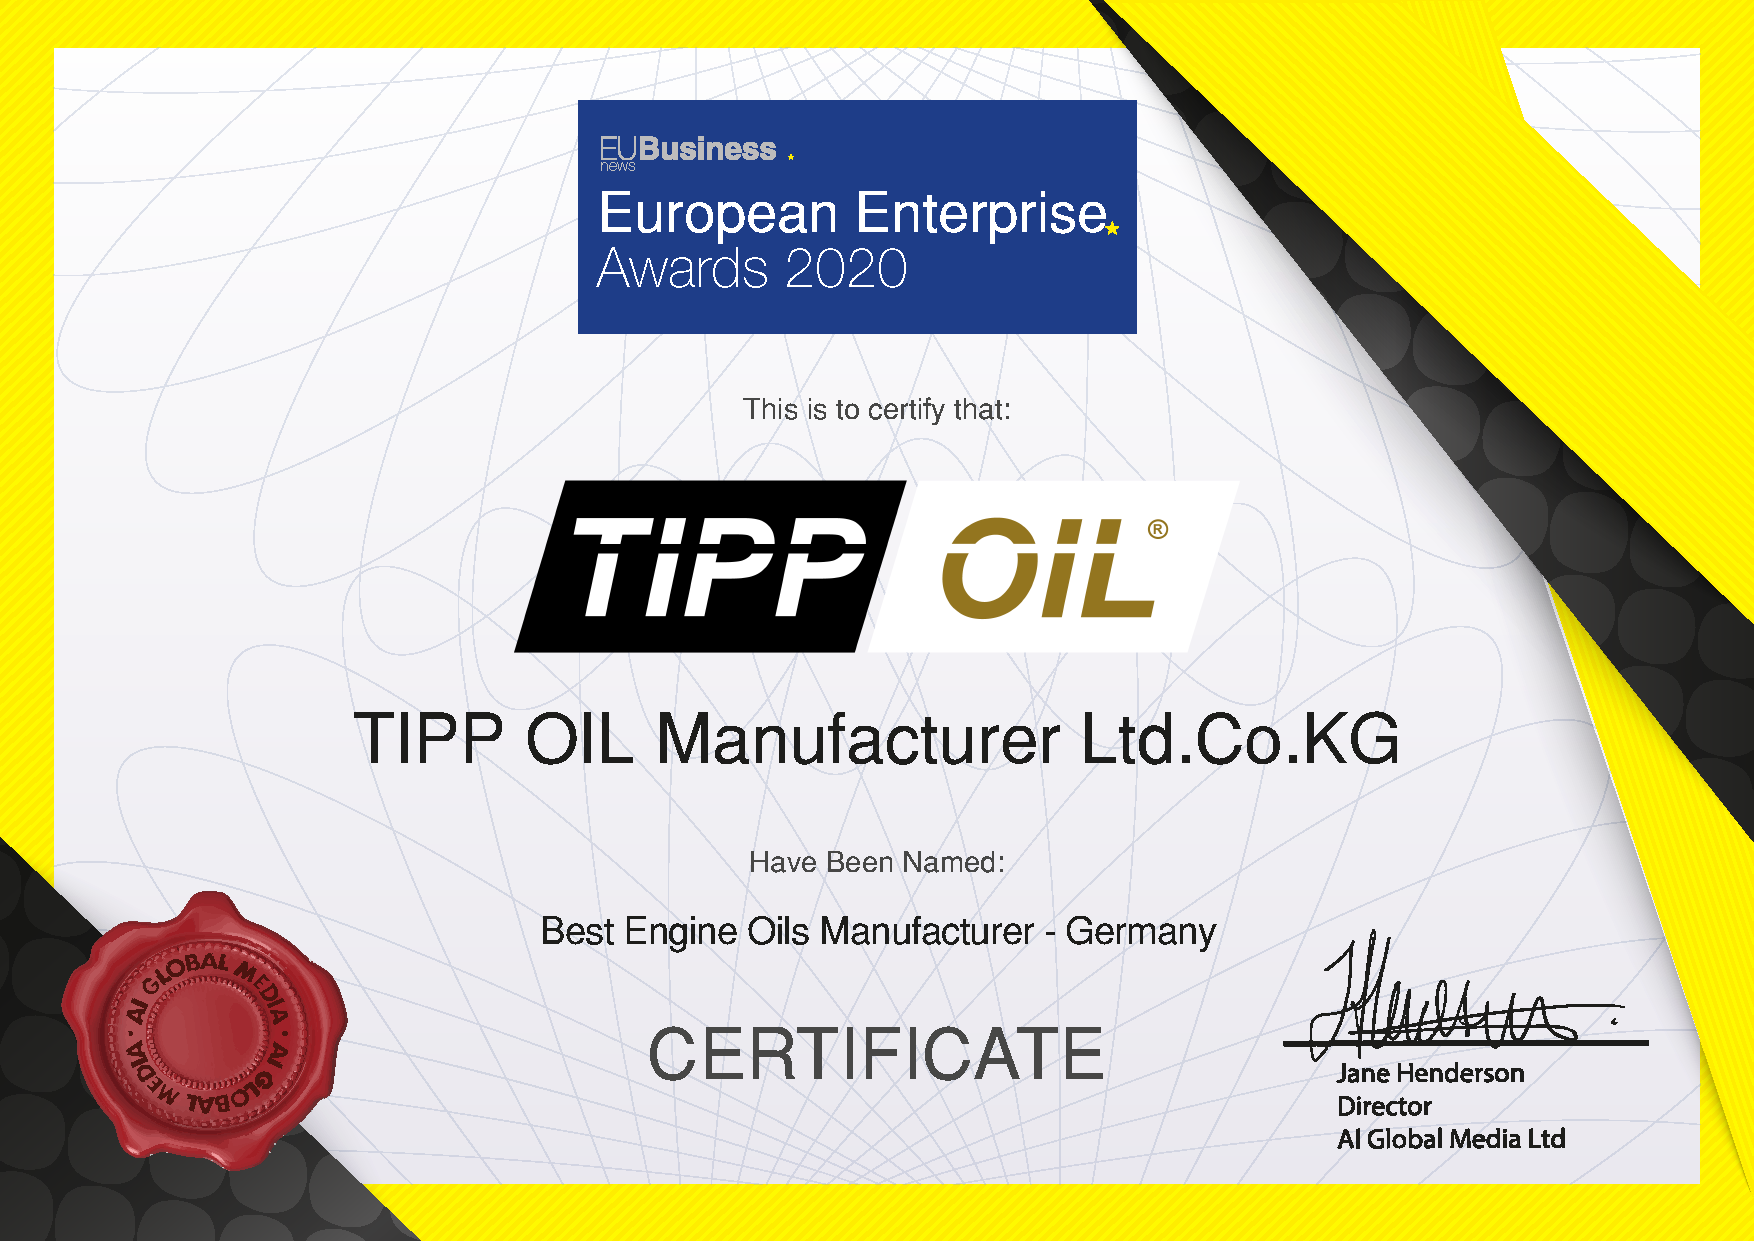 European_enterprise_Certificate